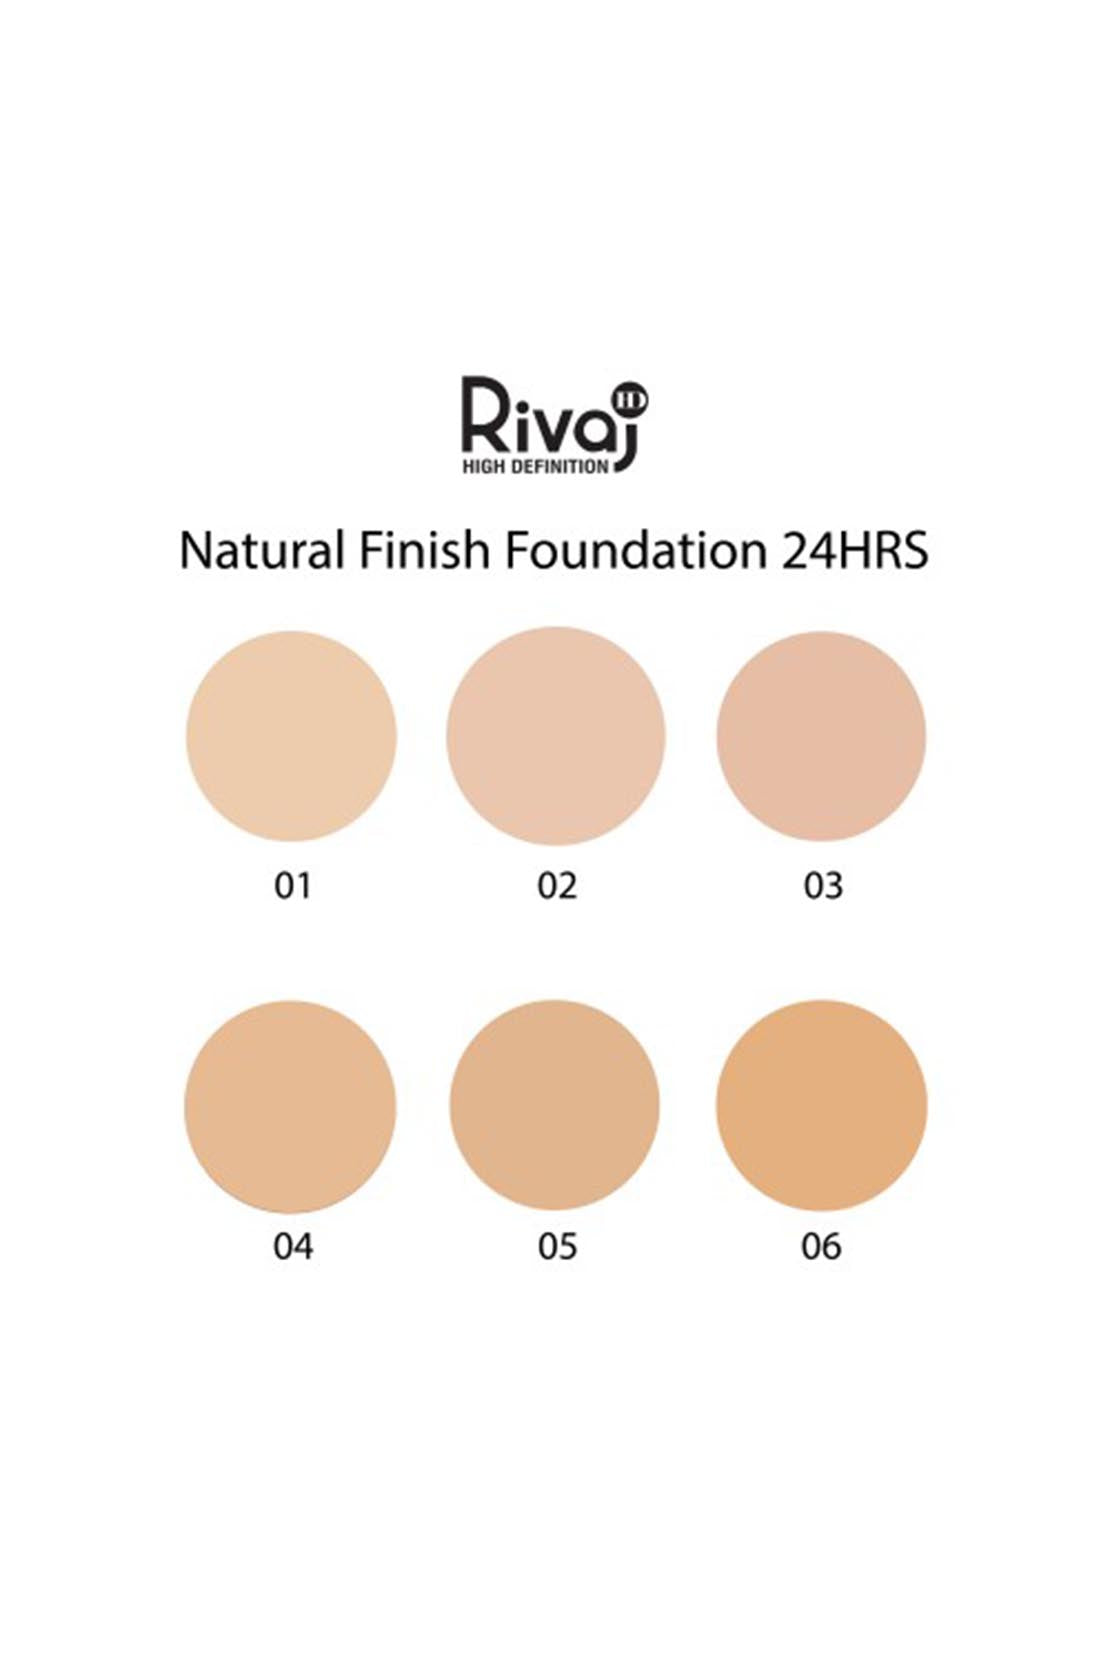 RIVAJ HD NATURAL FINISH 24HRS FOUNDATION 30 ML